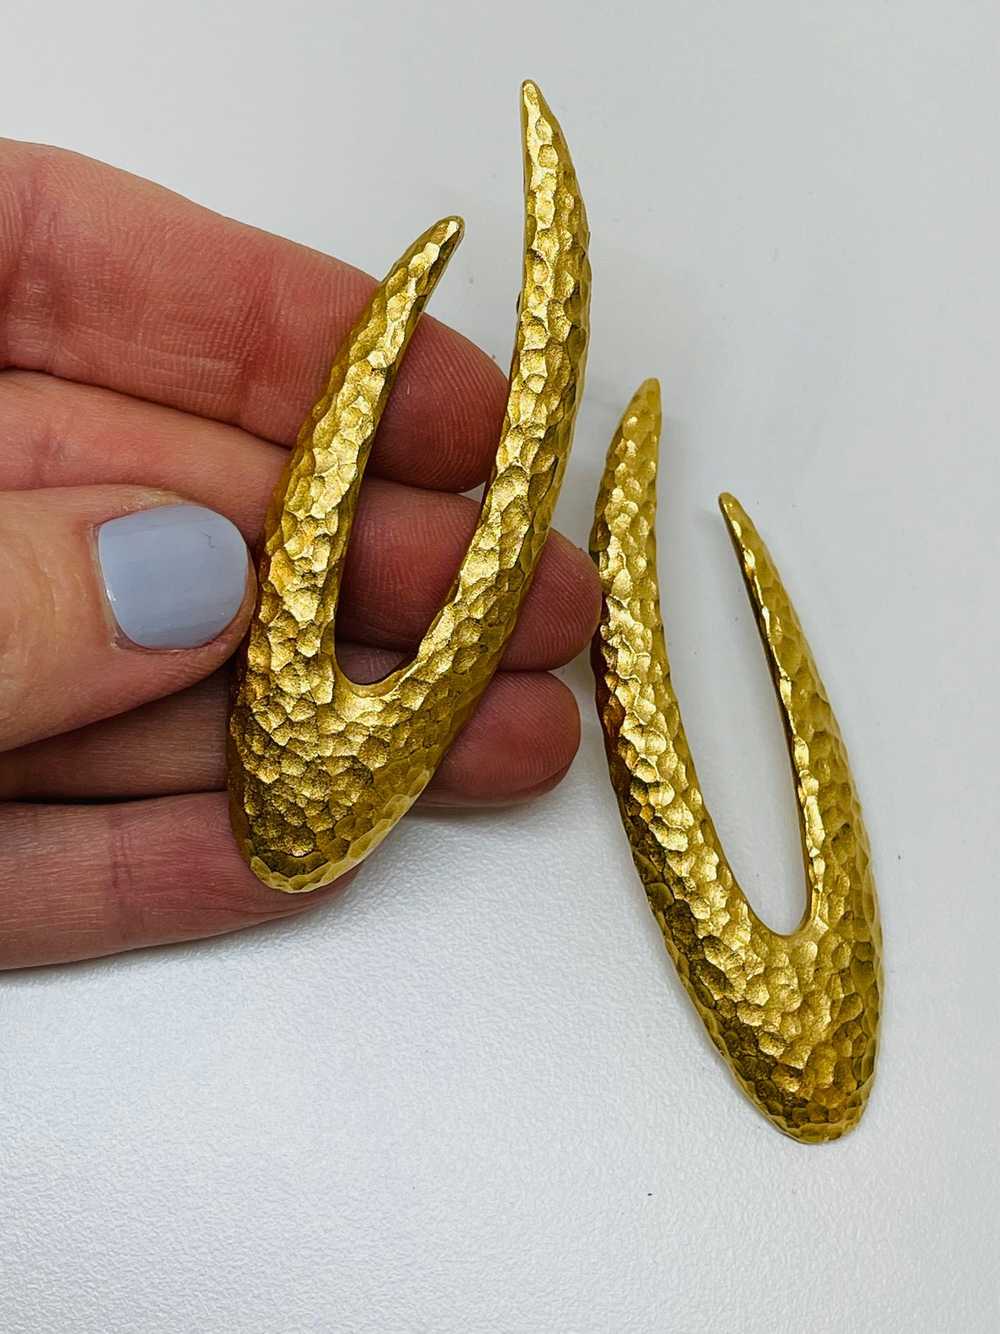 Designer Givenchy Hammered Gold Earrings - image 5